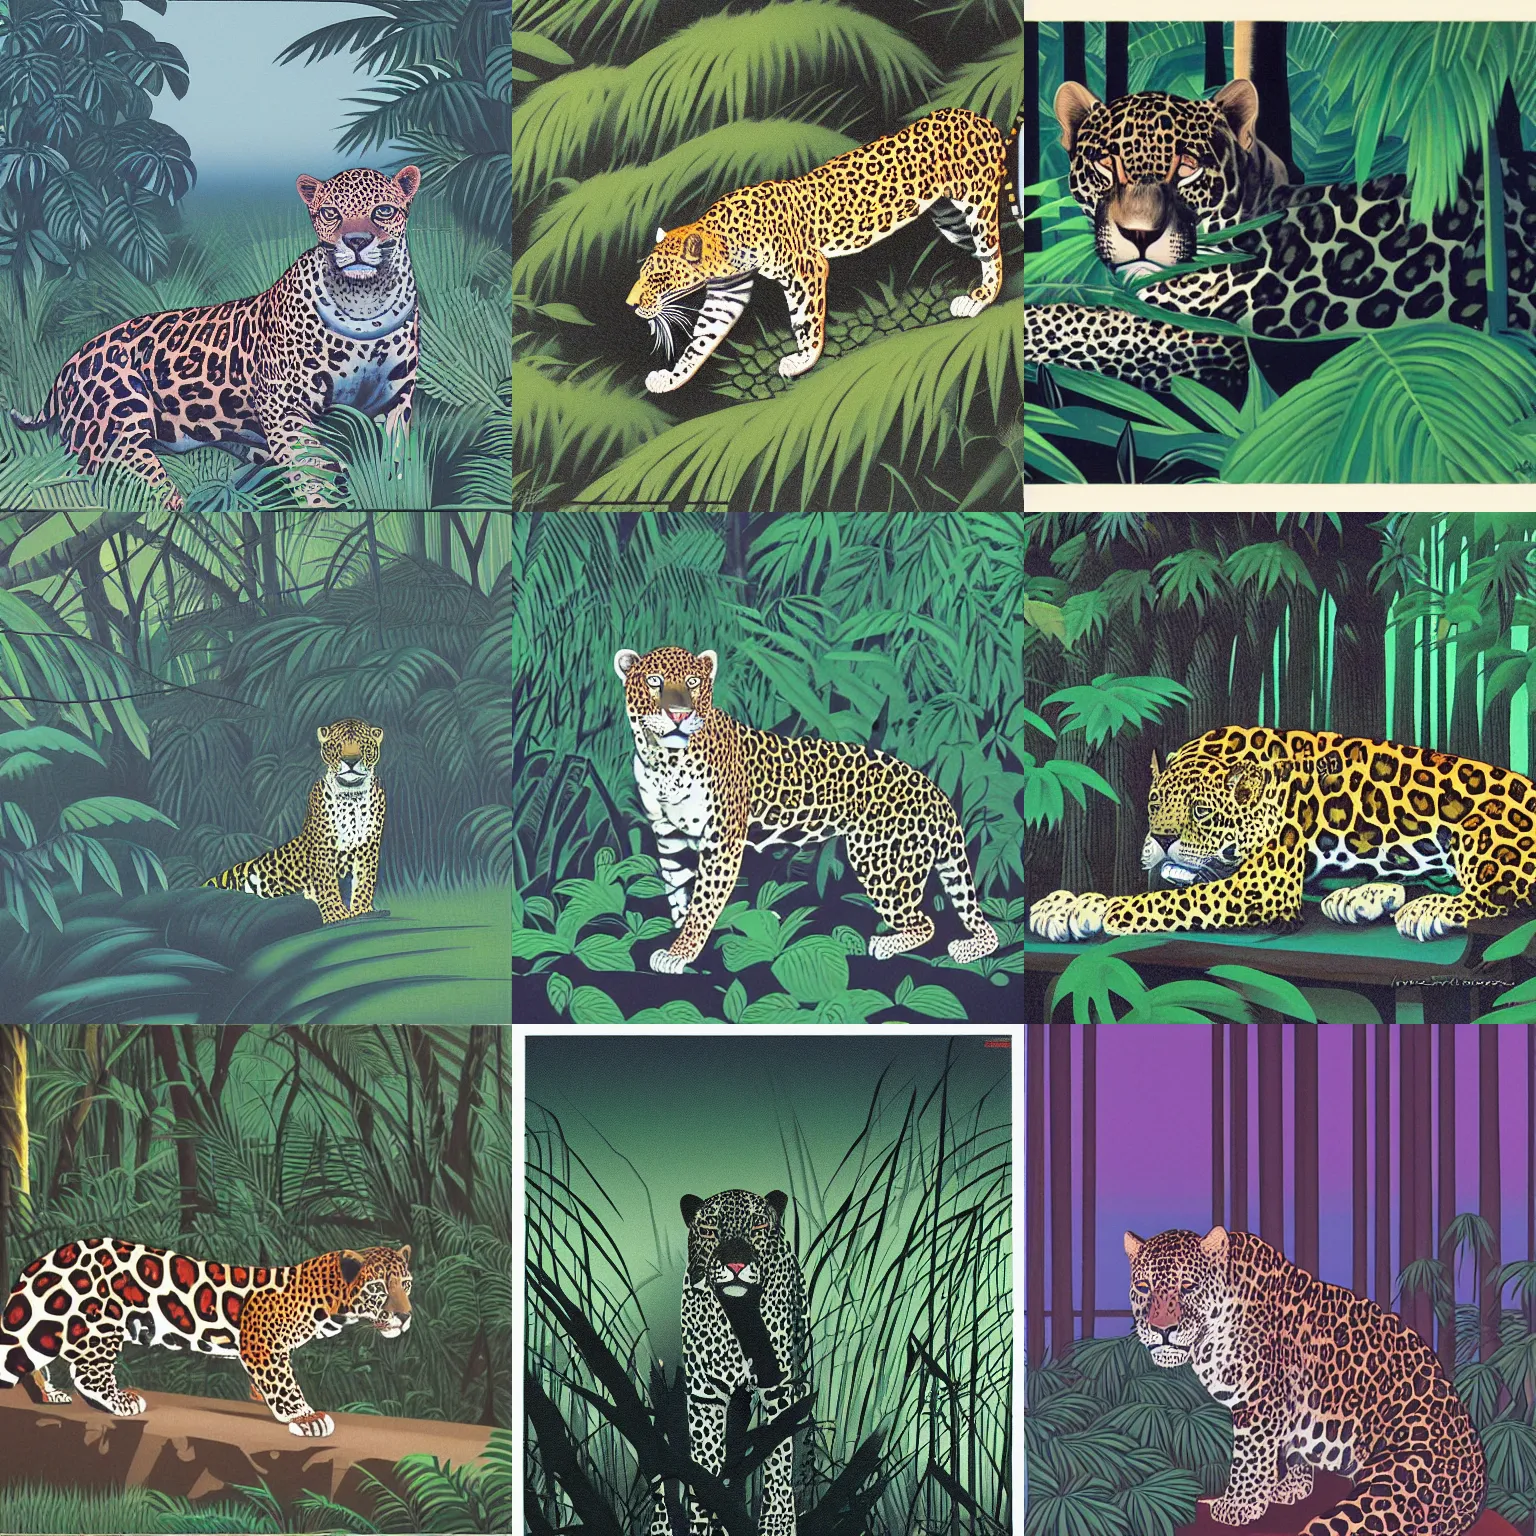 Prompt: intense jaguar in a dark misty jungle, painted by Hiroshi Nagai. Aesthetics of Hiroshi Nagai